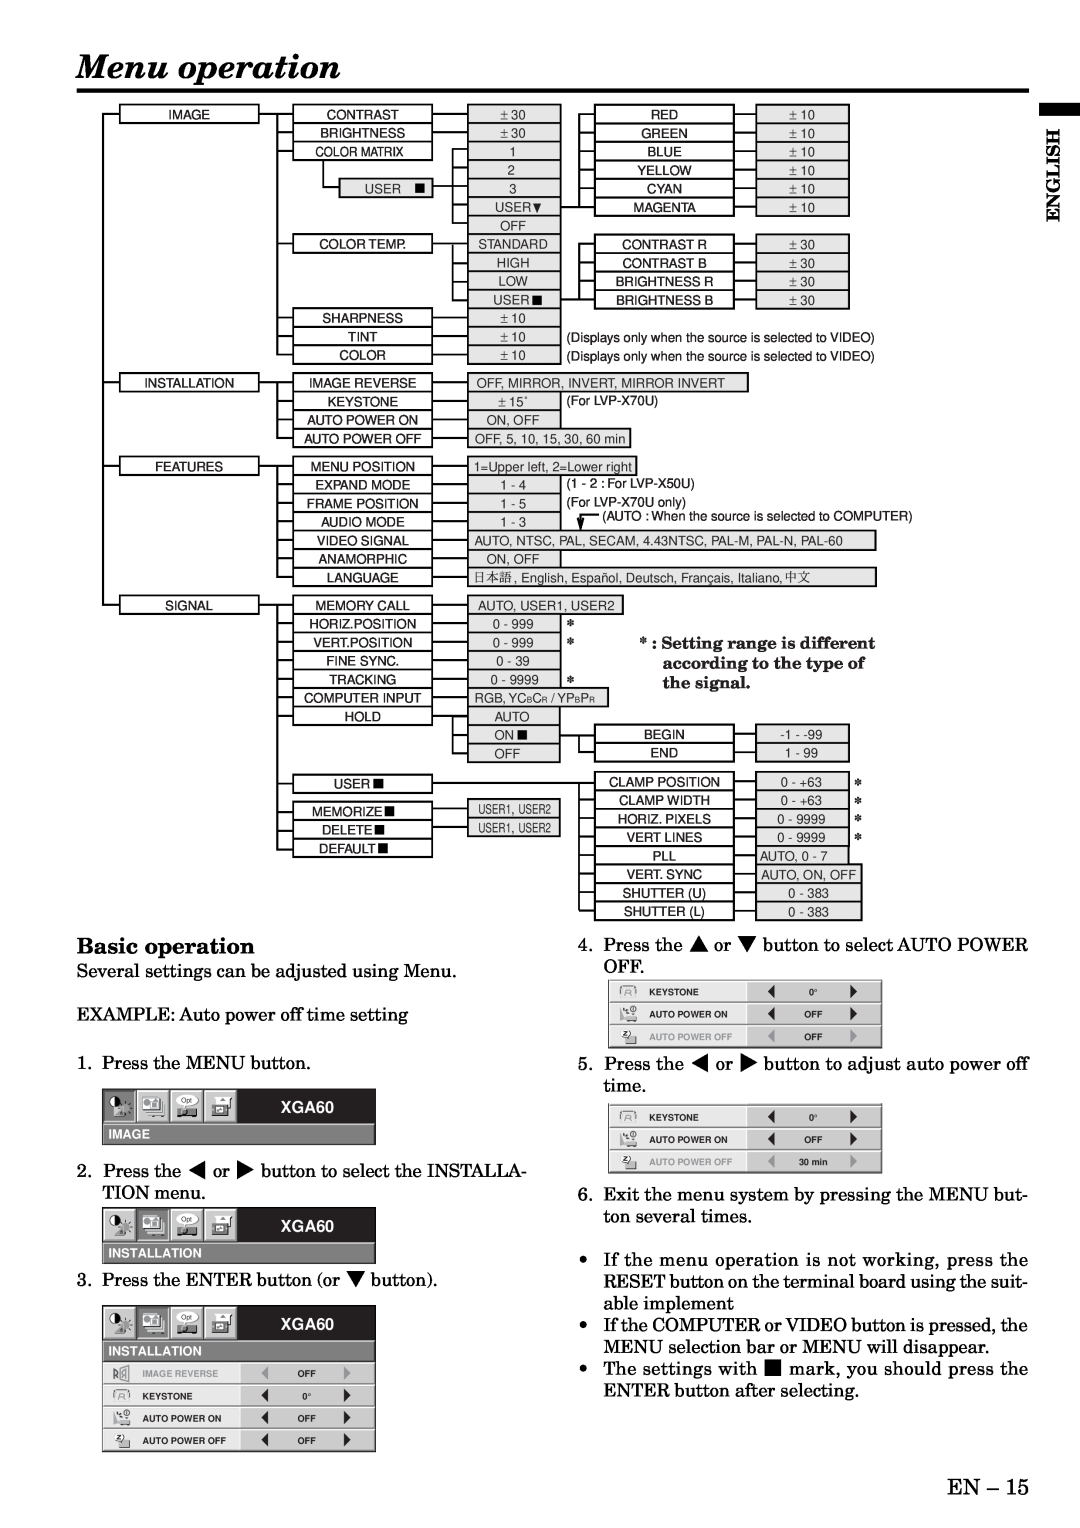 Mitsubishi Electronics X70U user manual Menu operation, Basic operation 